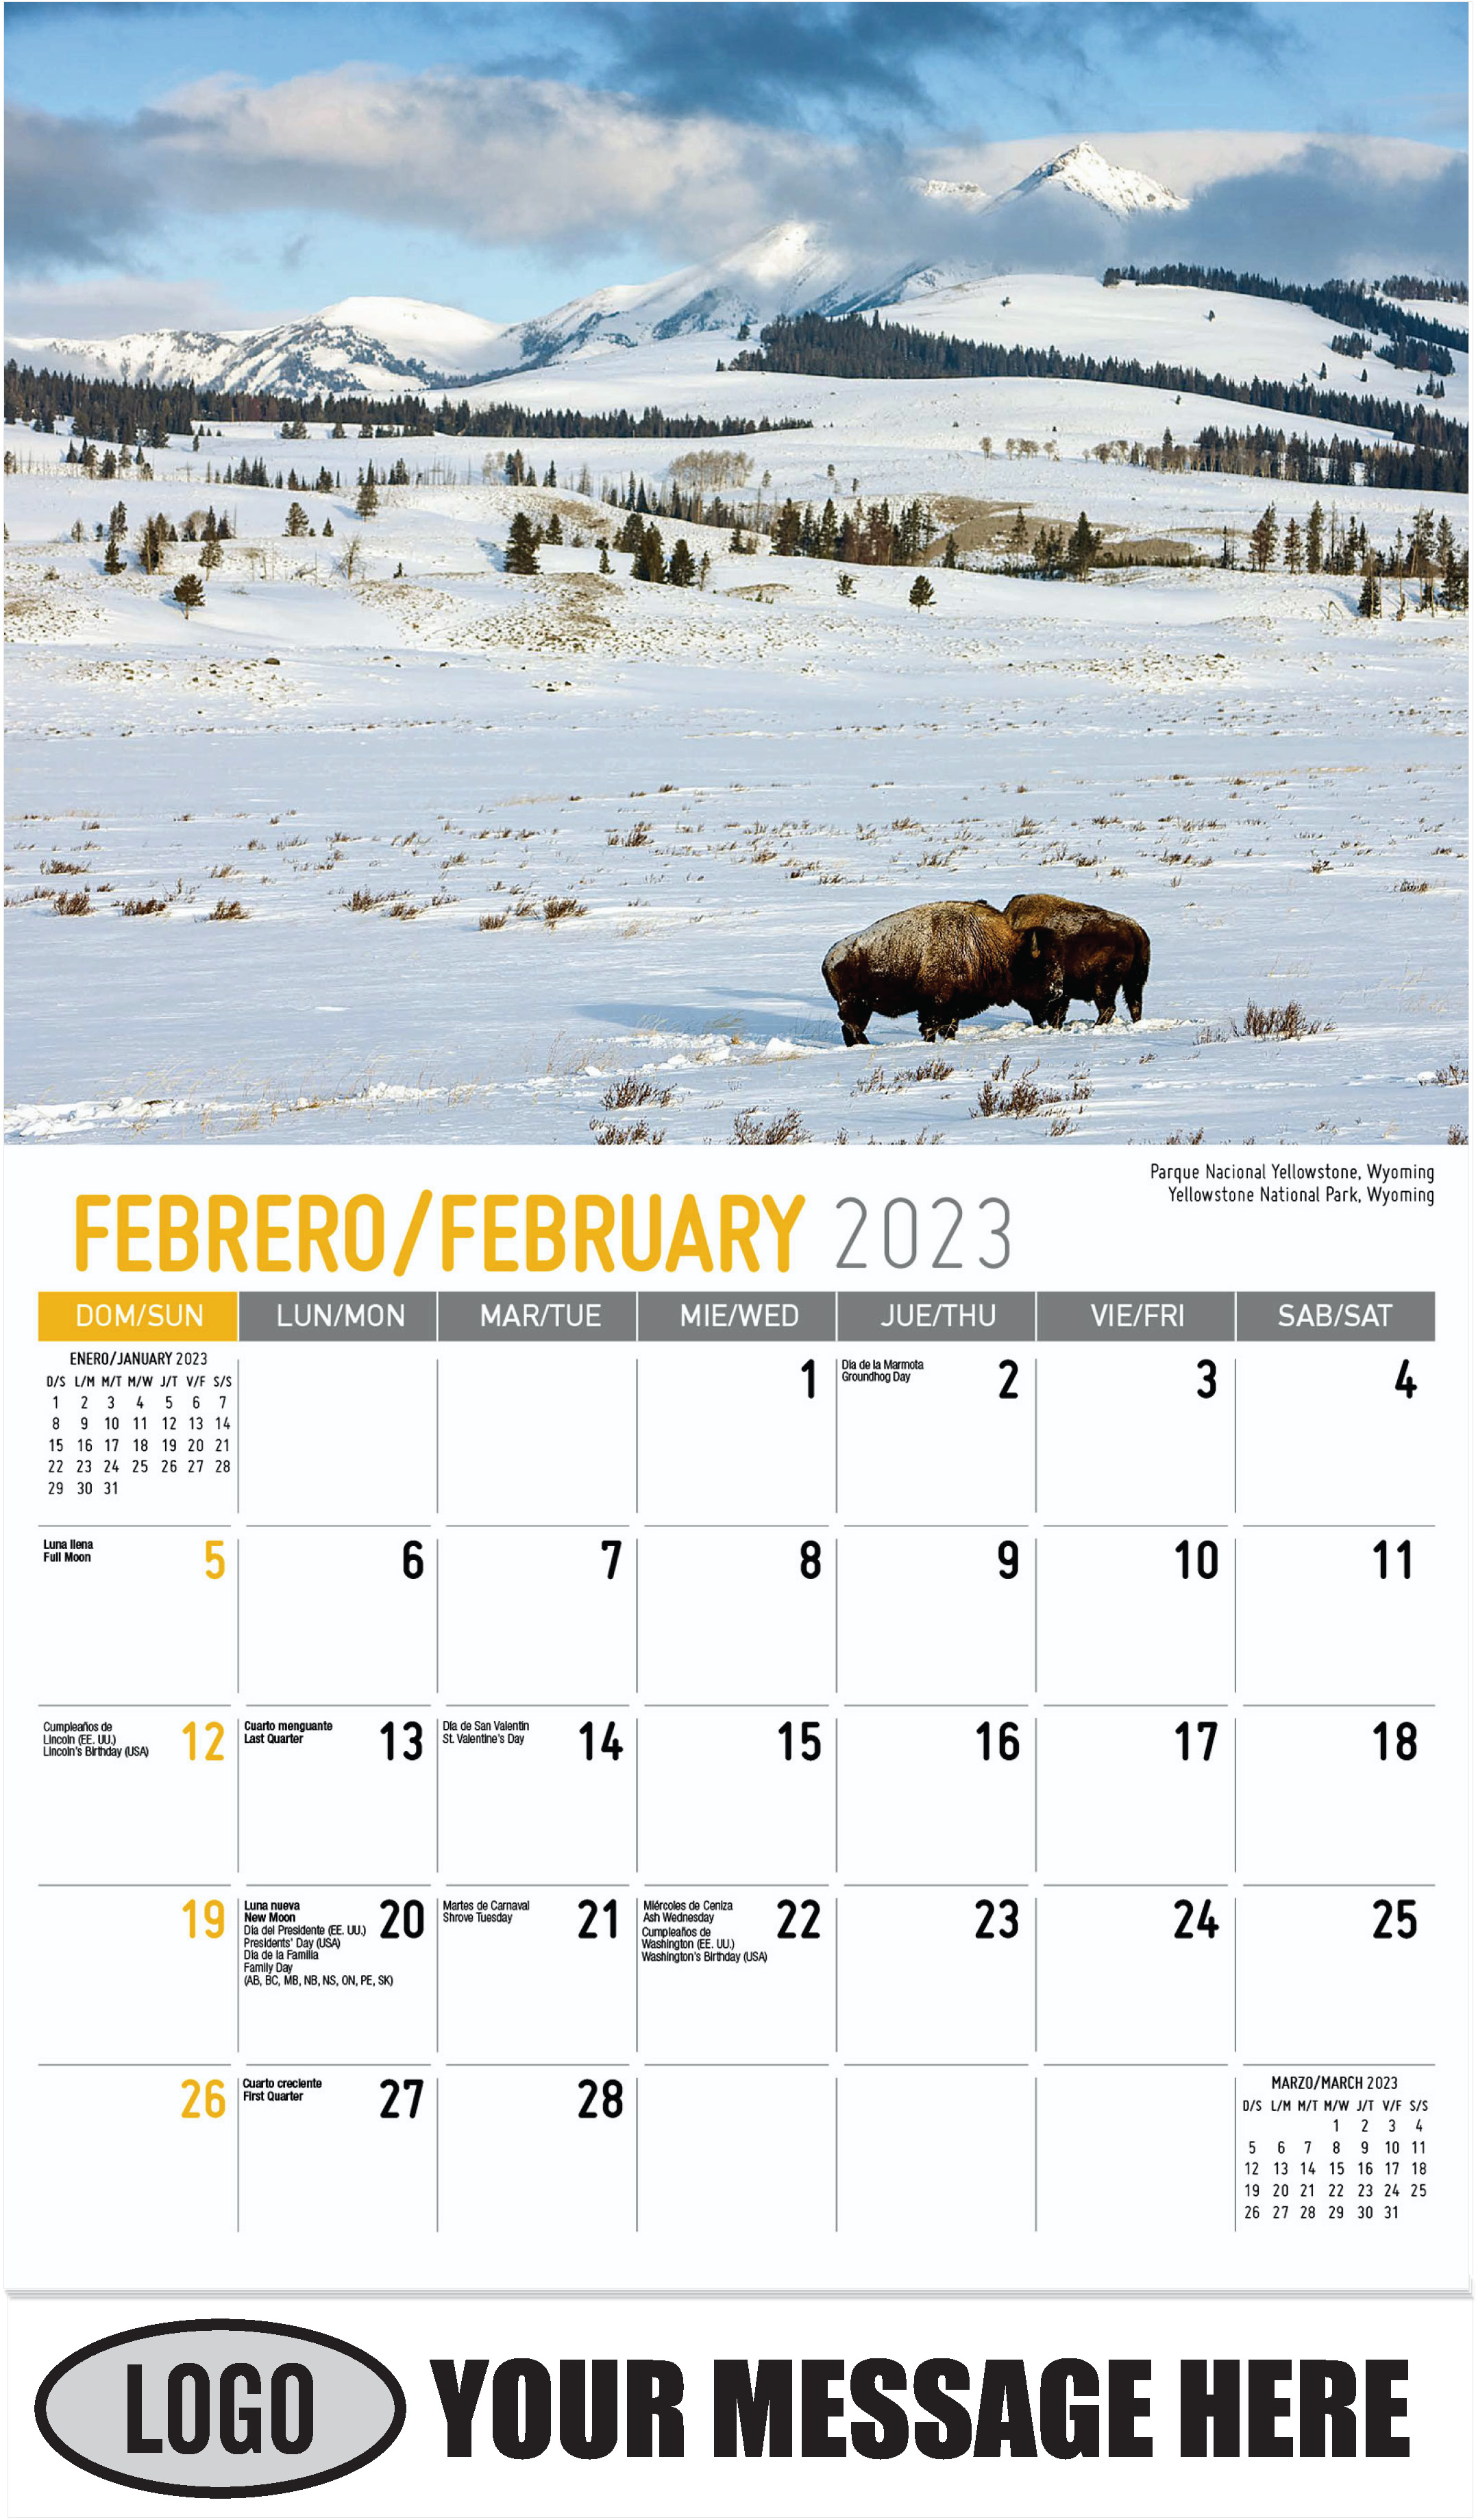 Yellowstone National Park, Wyoming - February - Scenes of America (Spanish-English bilingual) 2023 Promotional Calendar